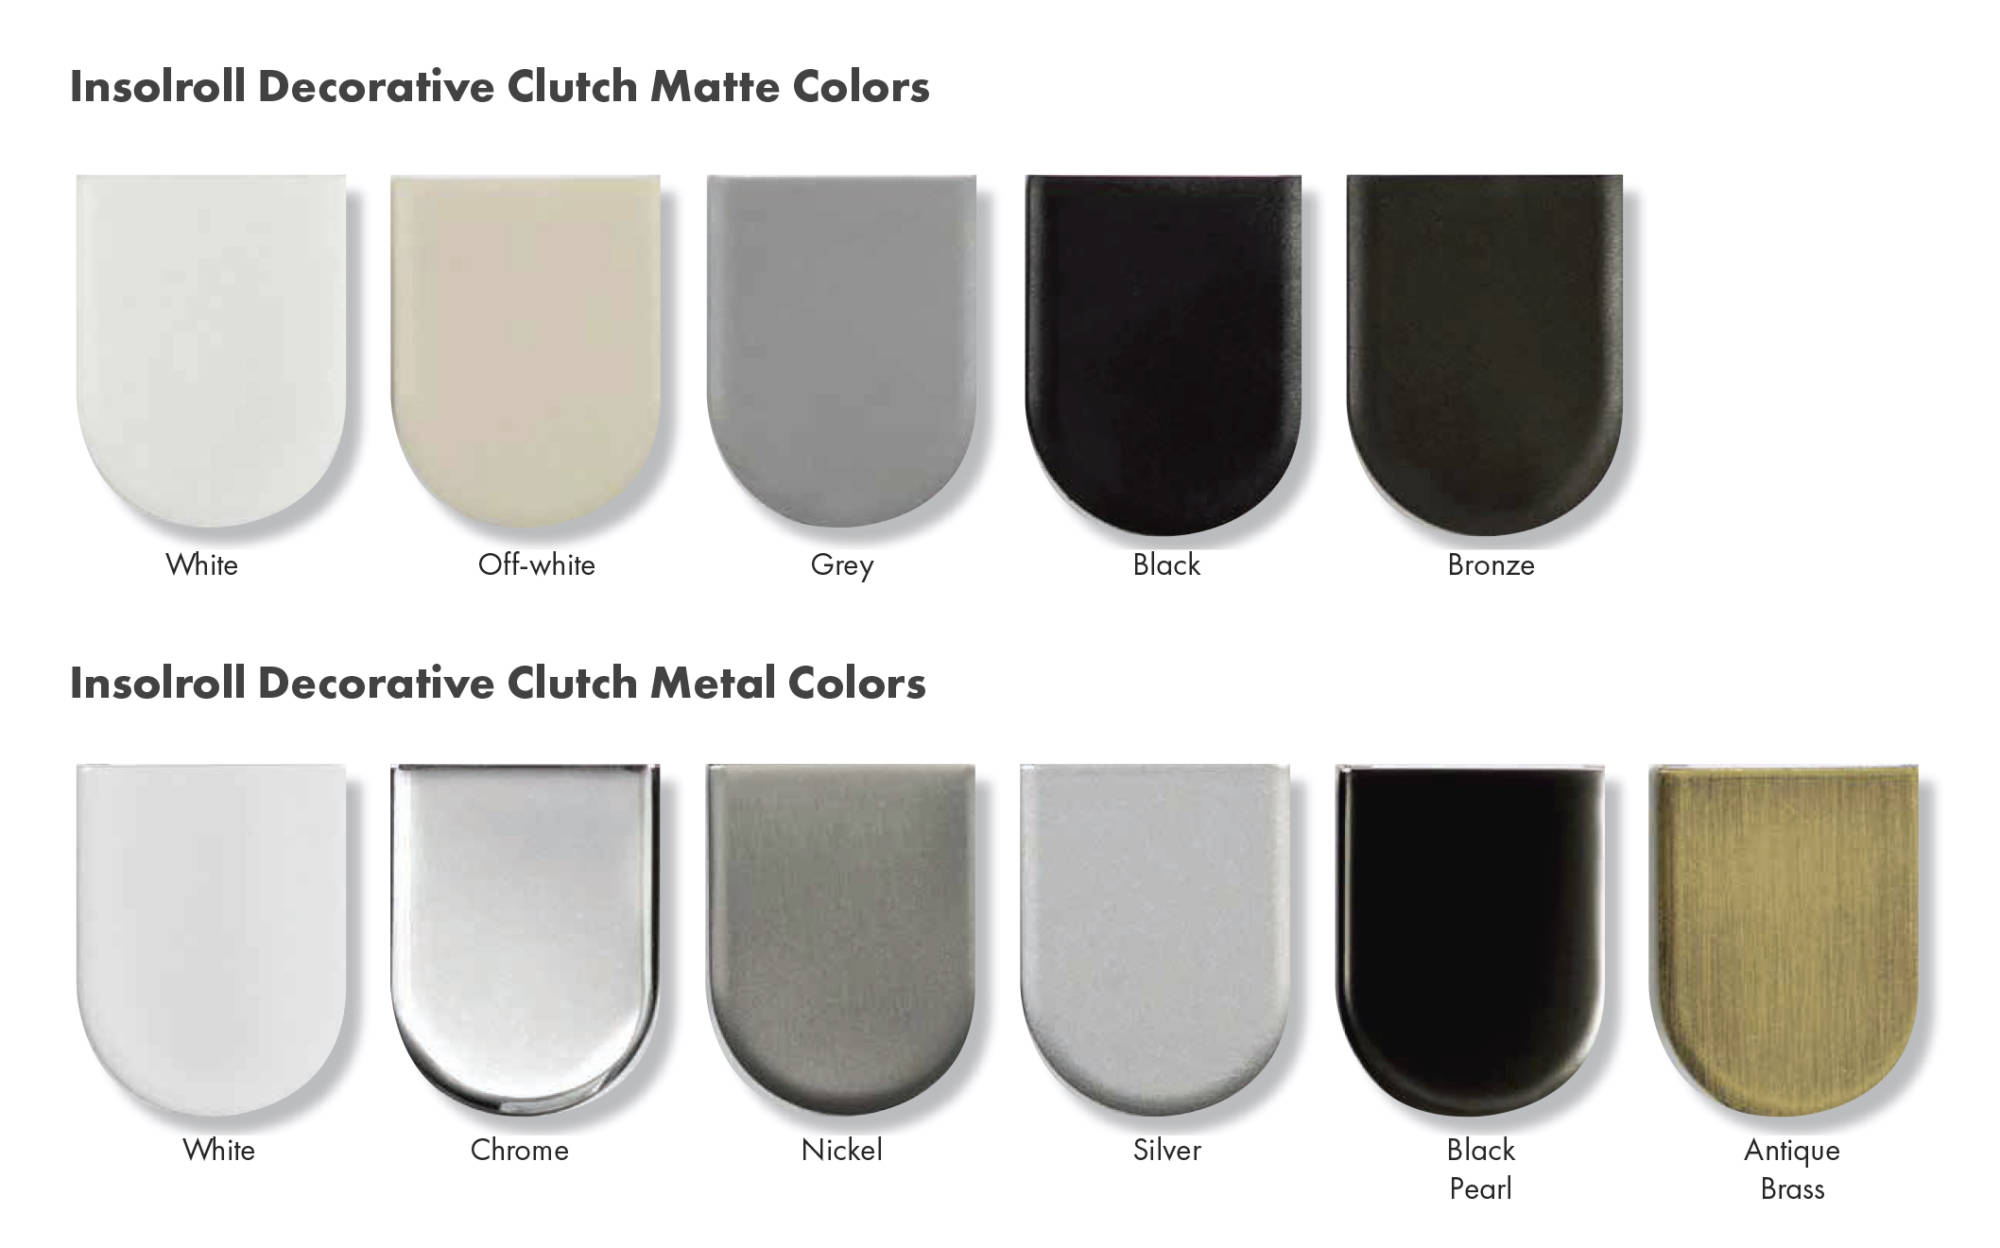 Insolroll Decorative Hardware Clutch colors